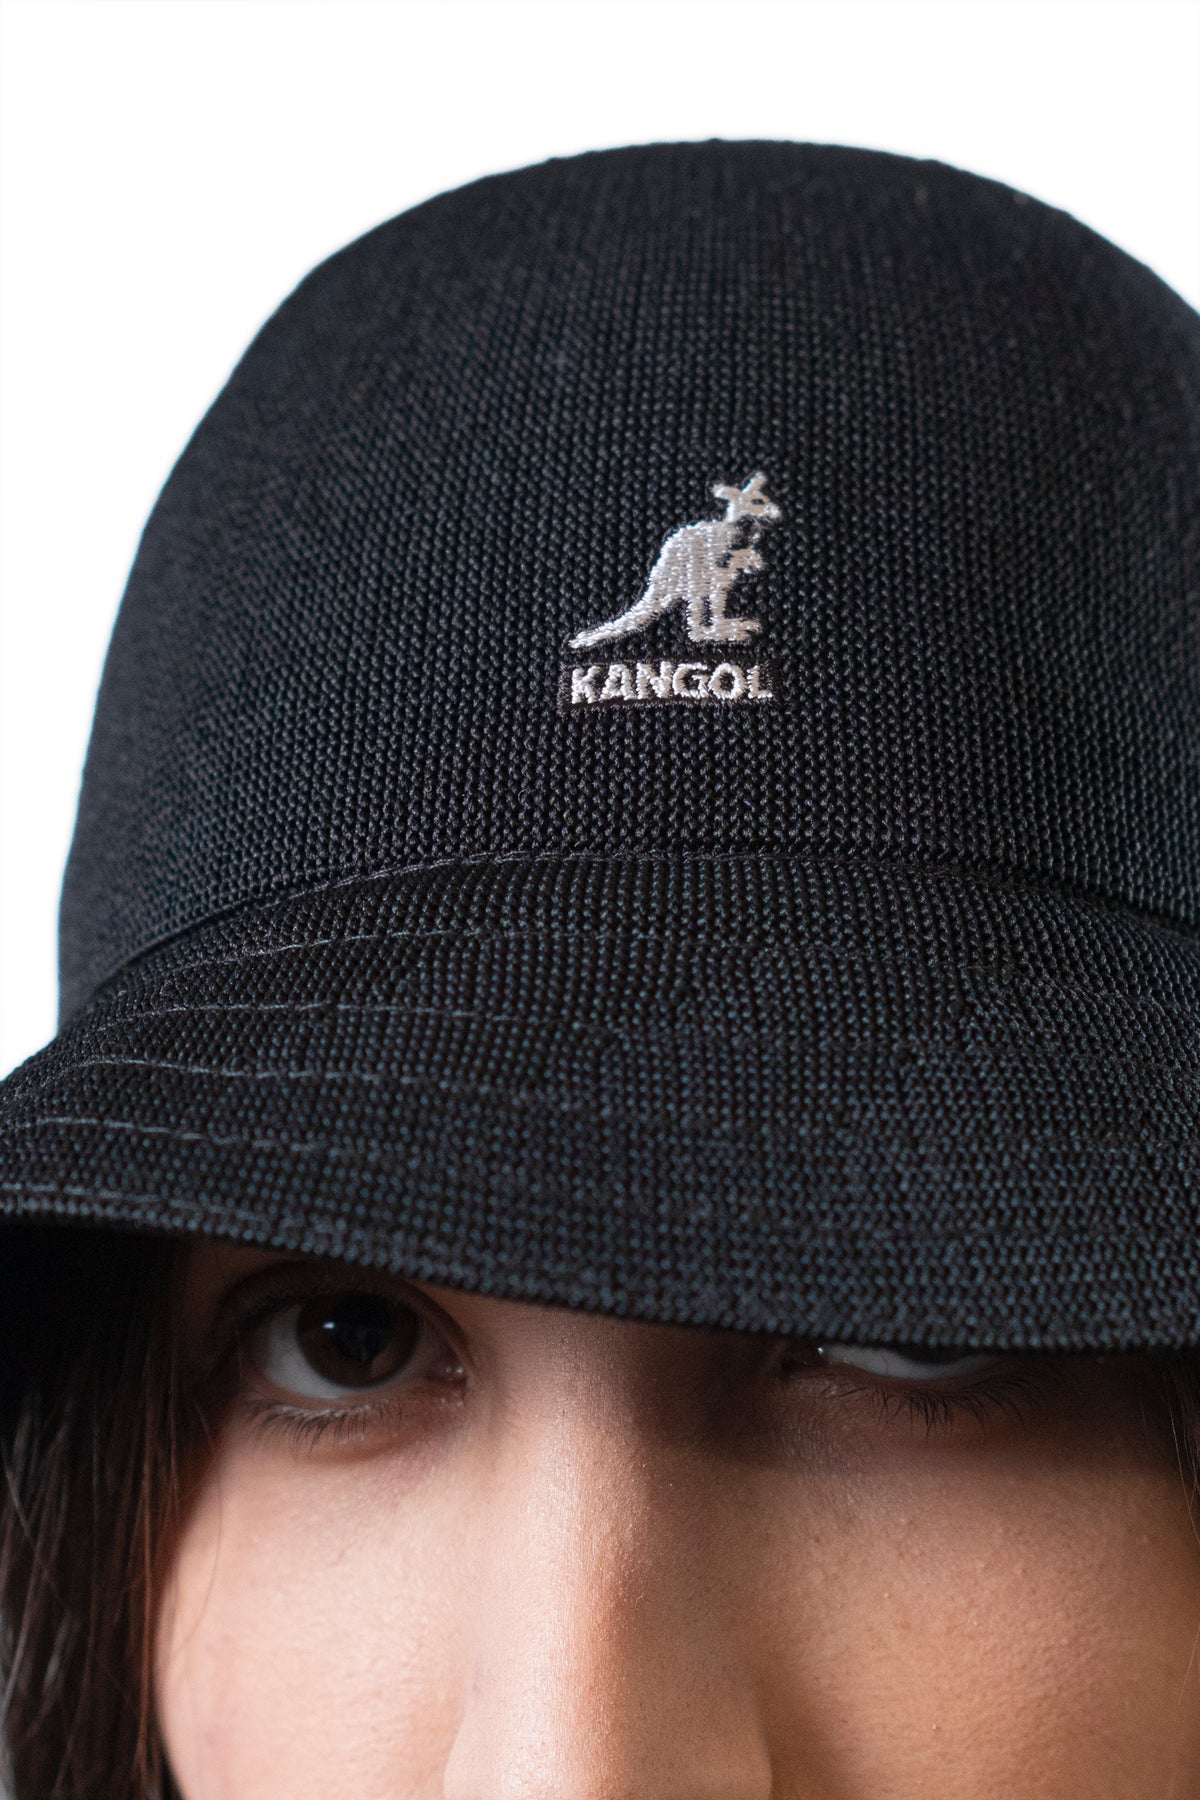 Kangol Tropic Casual Hat Black